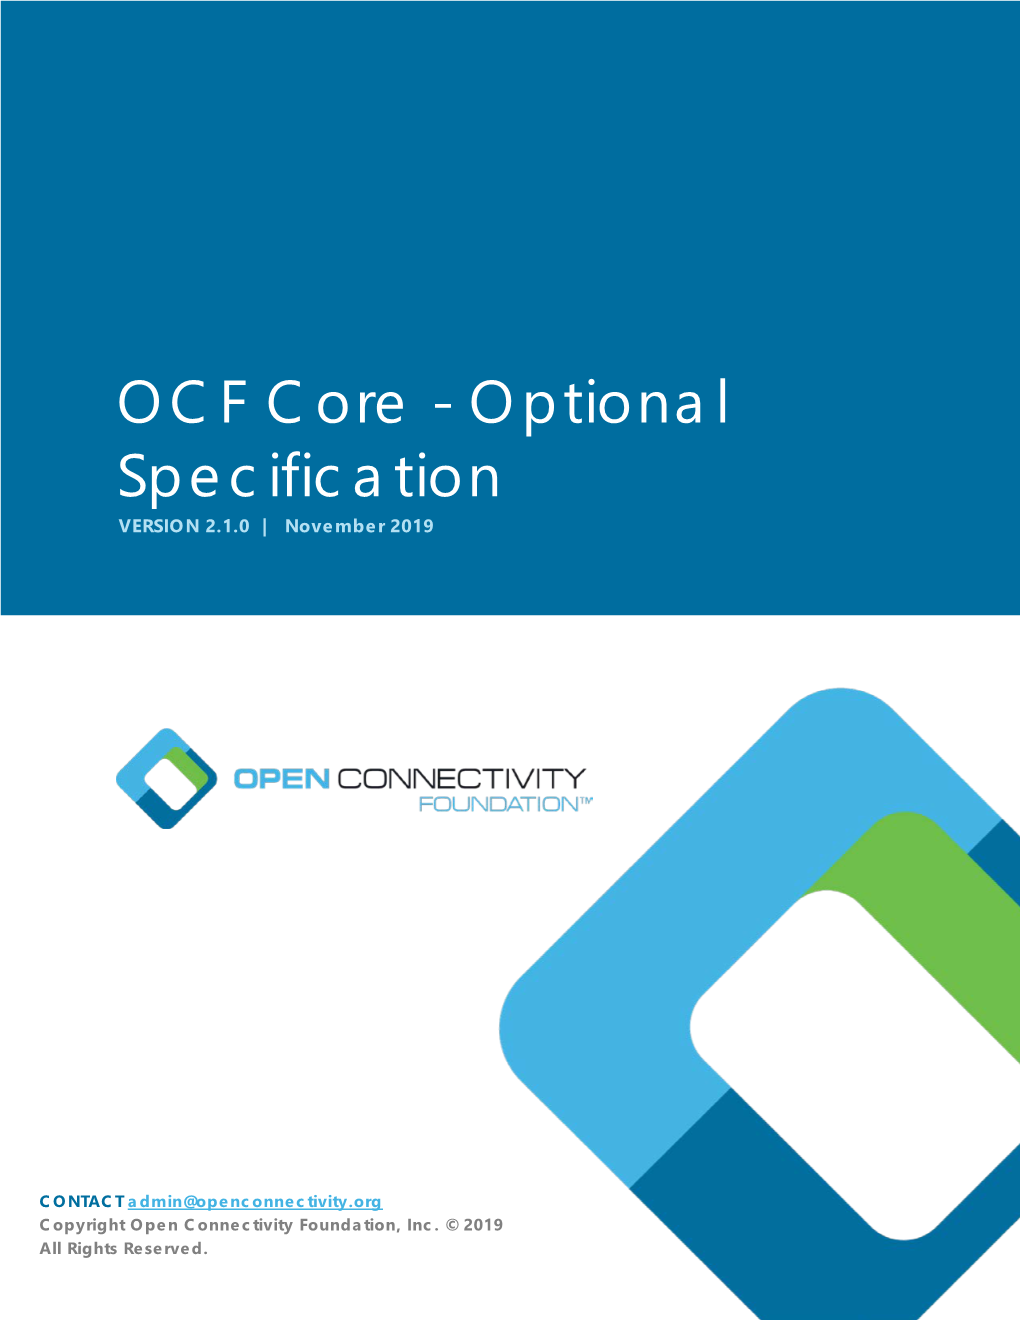 OCF Core Optional 2.1.0